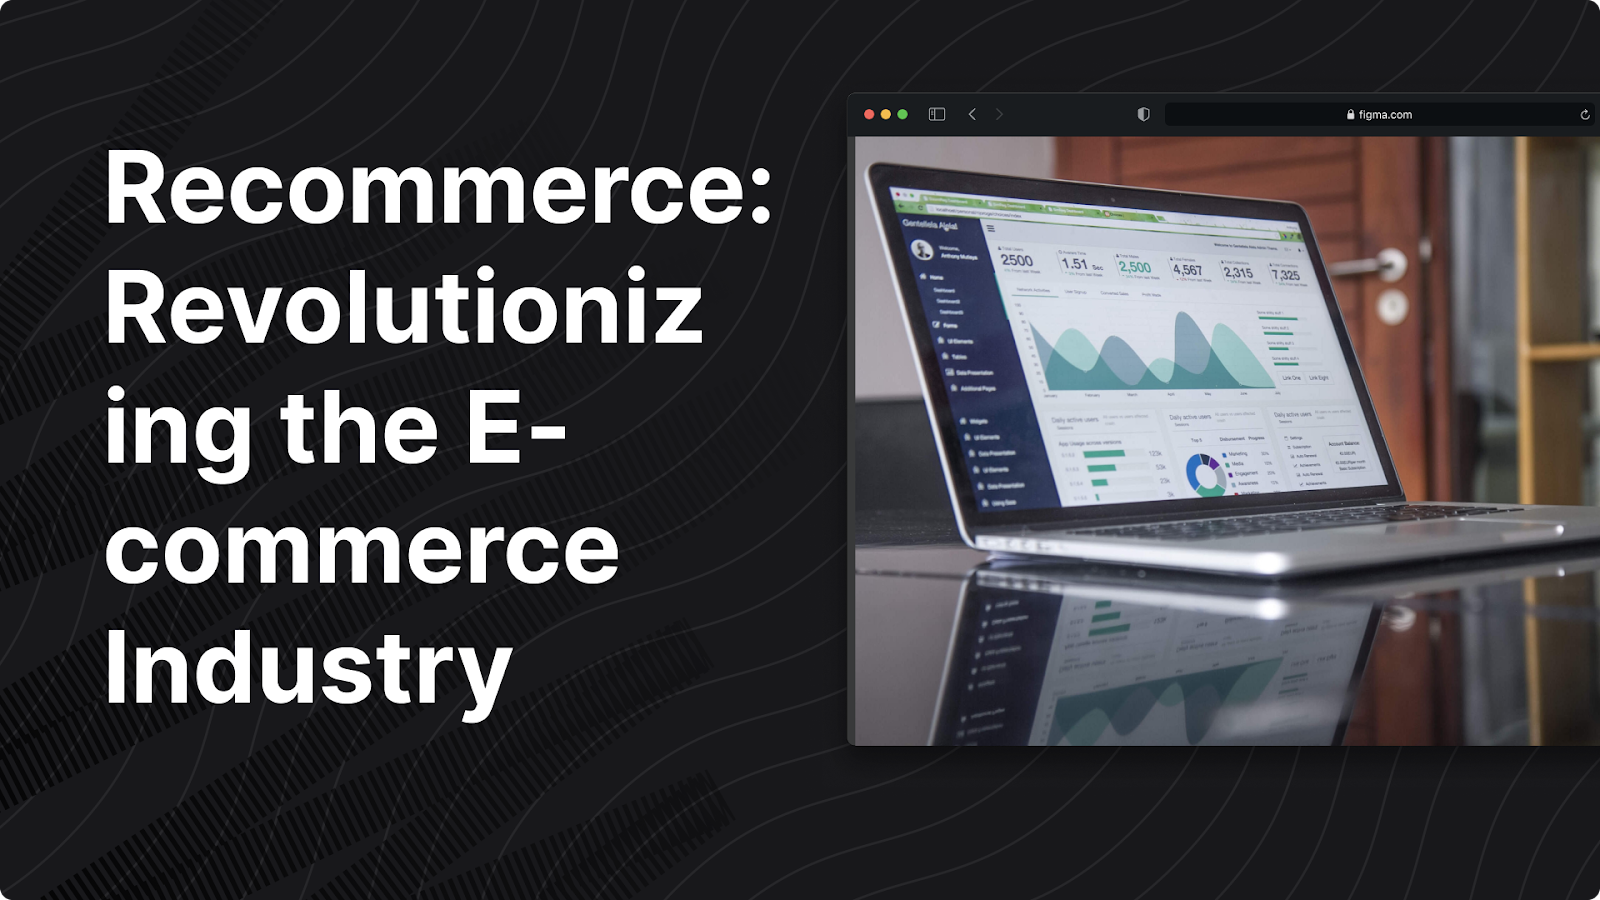 Recommerce: Revolutionizing the E-commerce Industry